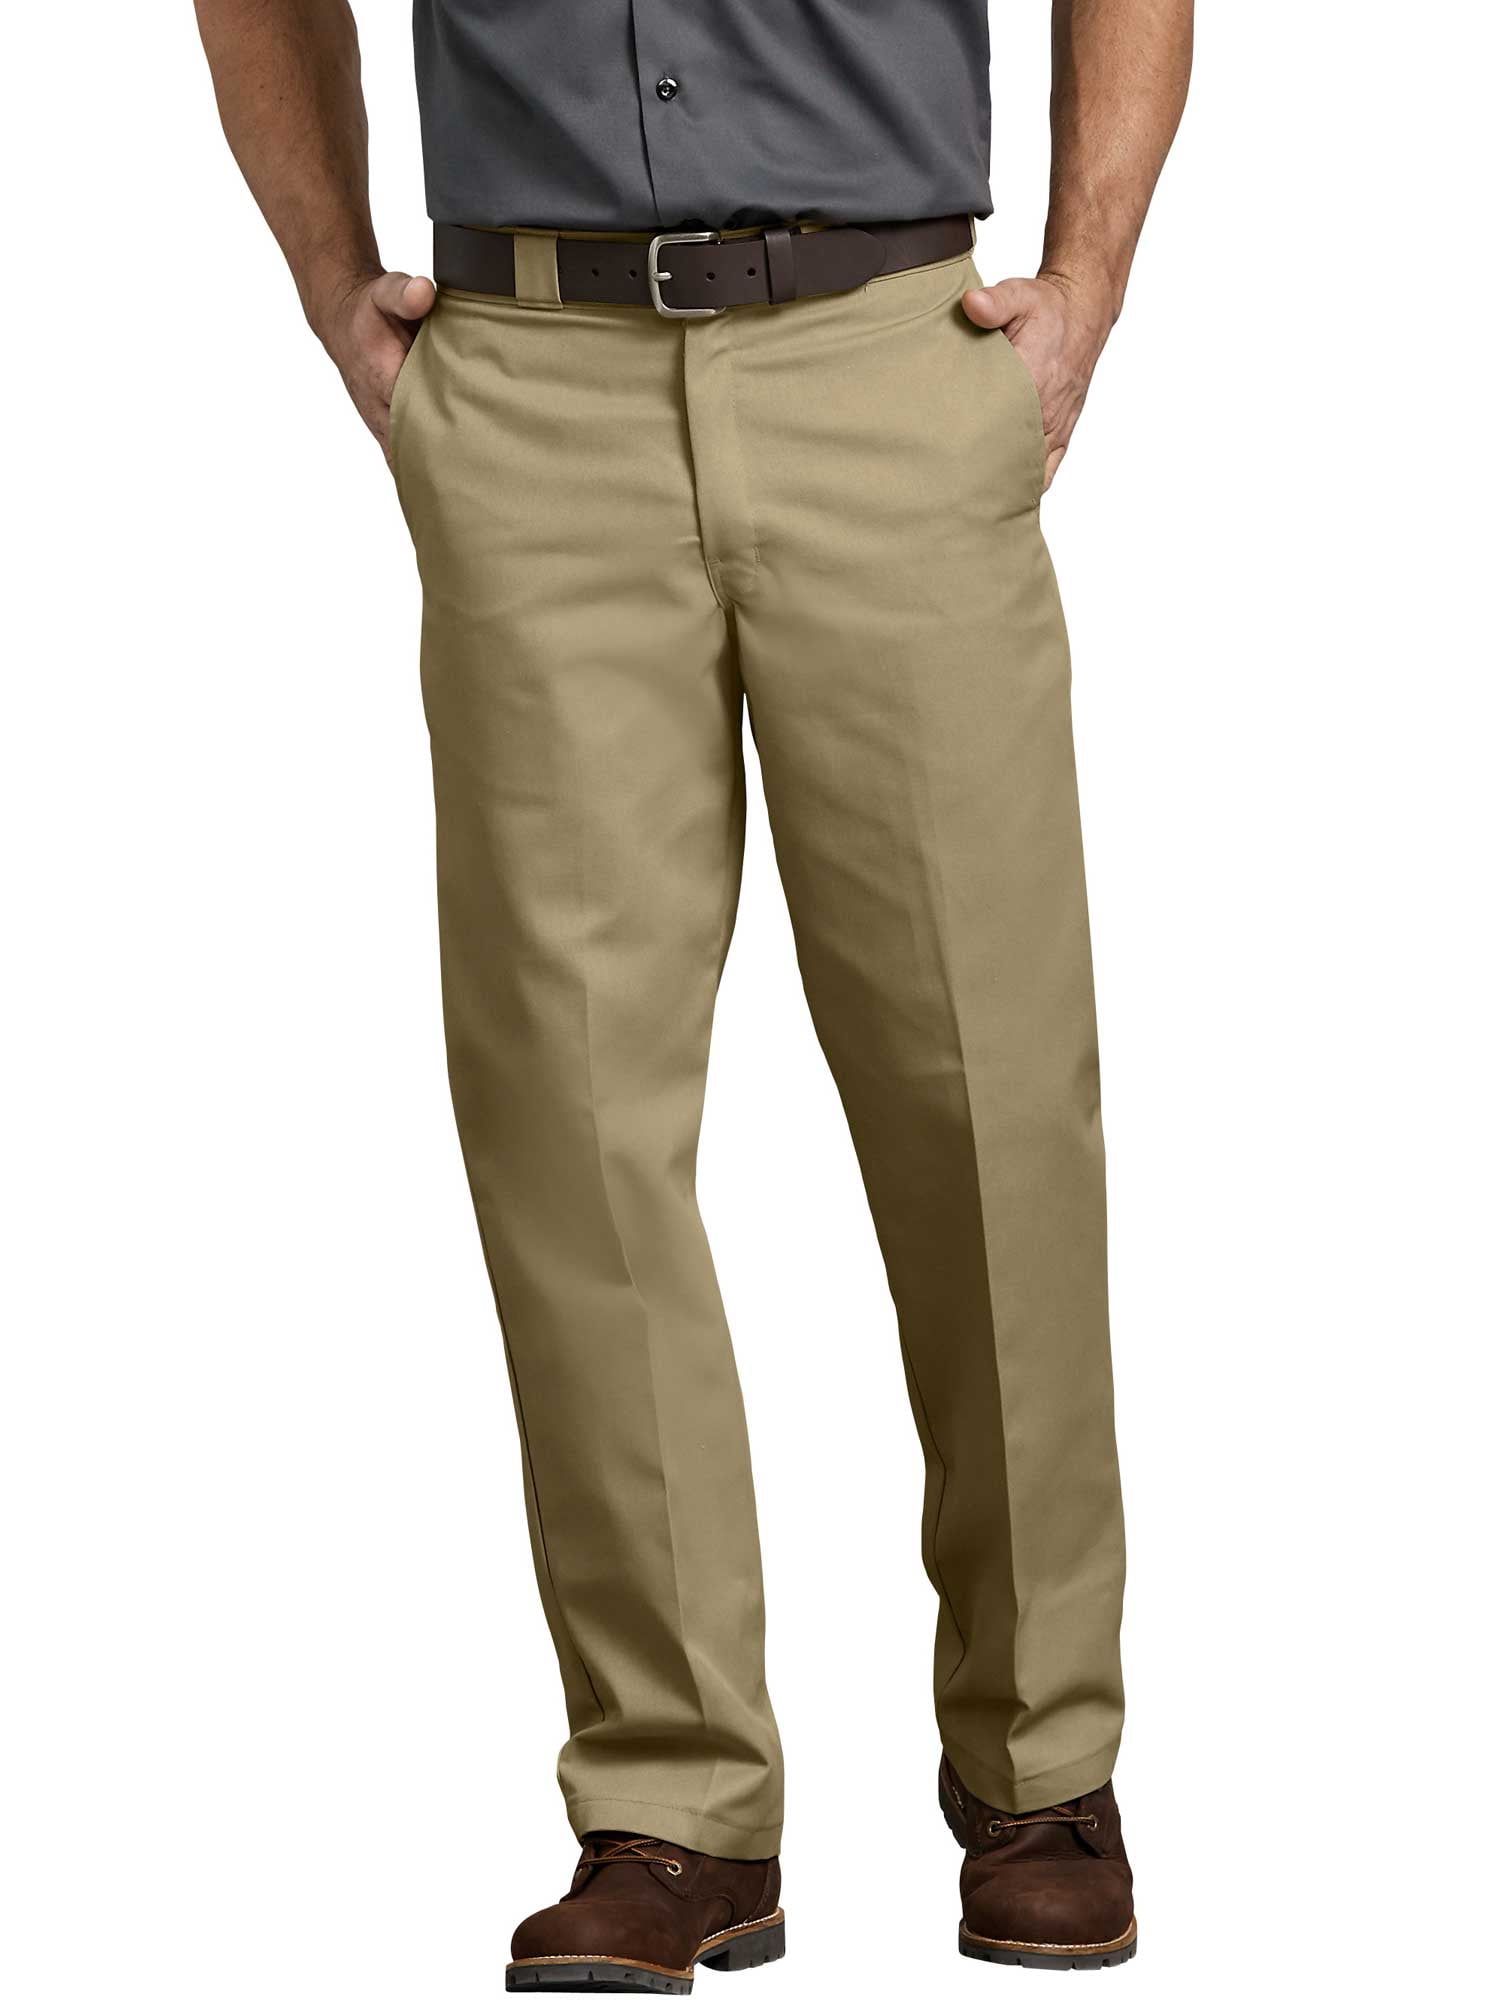 Dickies - Men's Multi-Use Pocket Work Pants - Walmart.com - Walmart.com